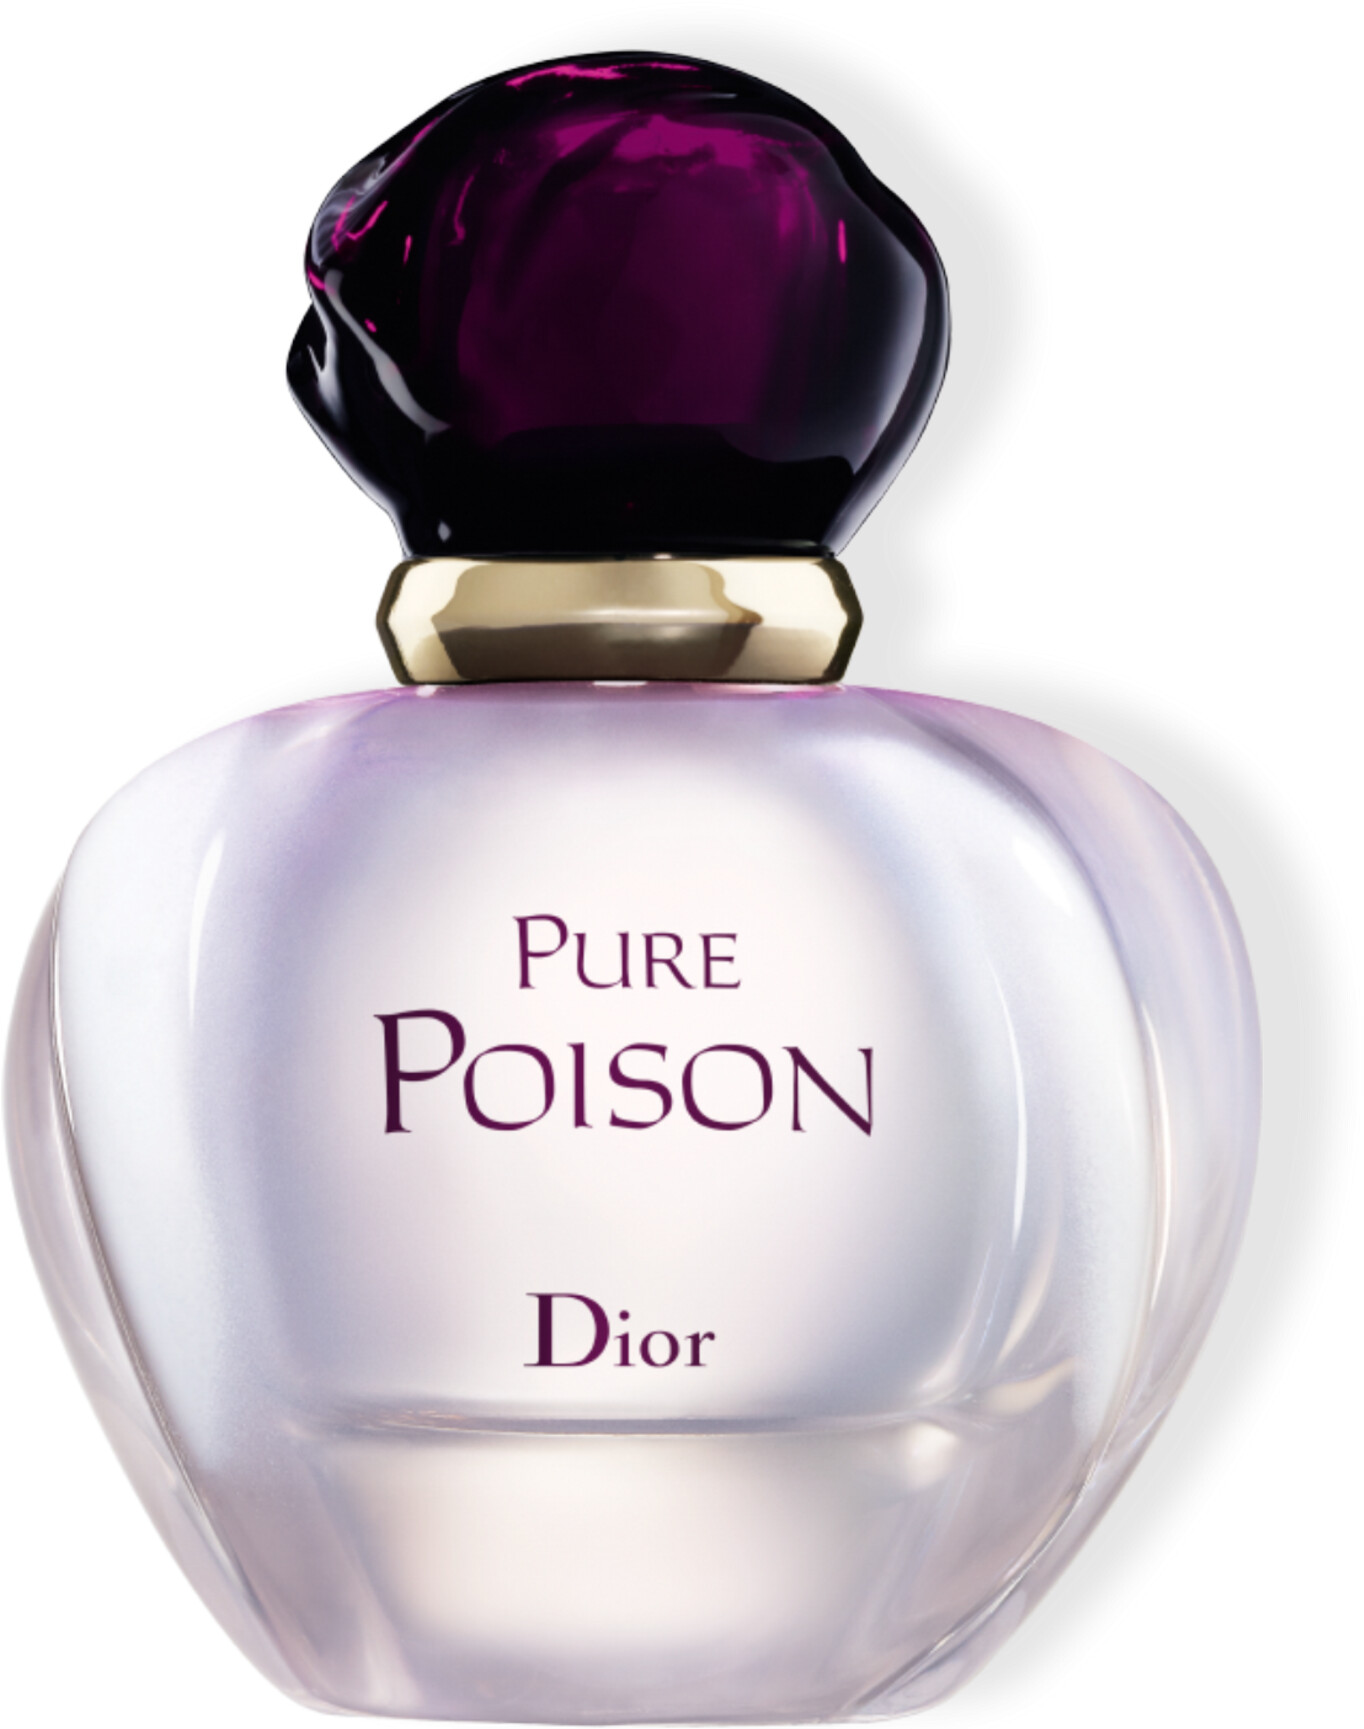 DIOR Pure Poison Eau de Parfum Spray 30ml